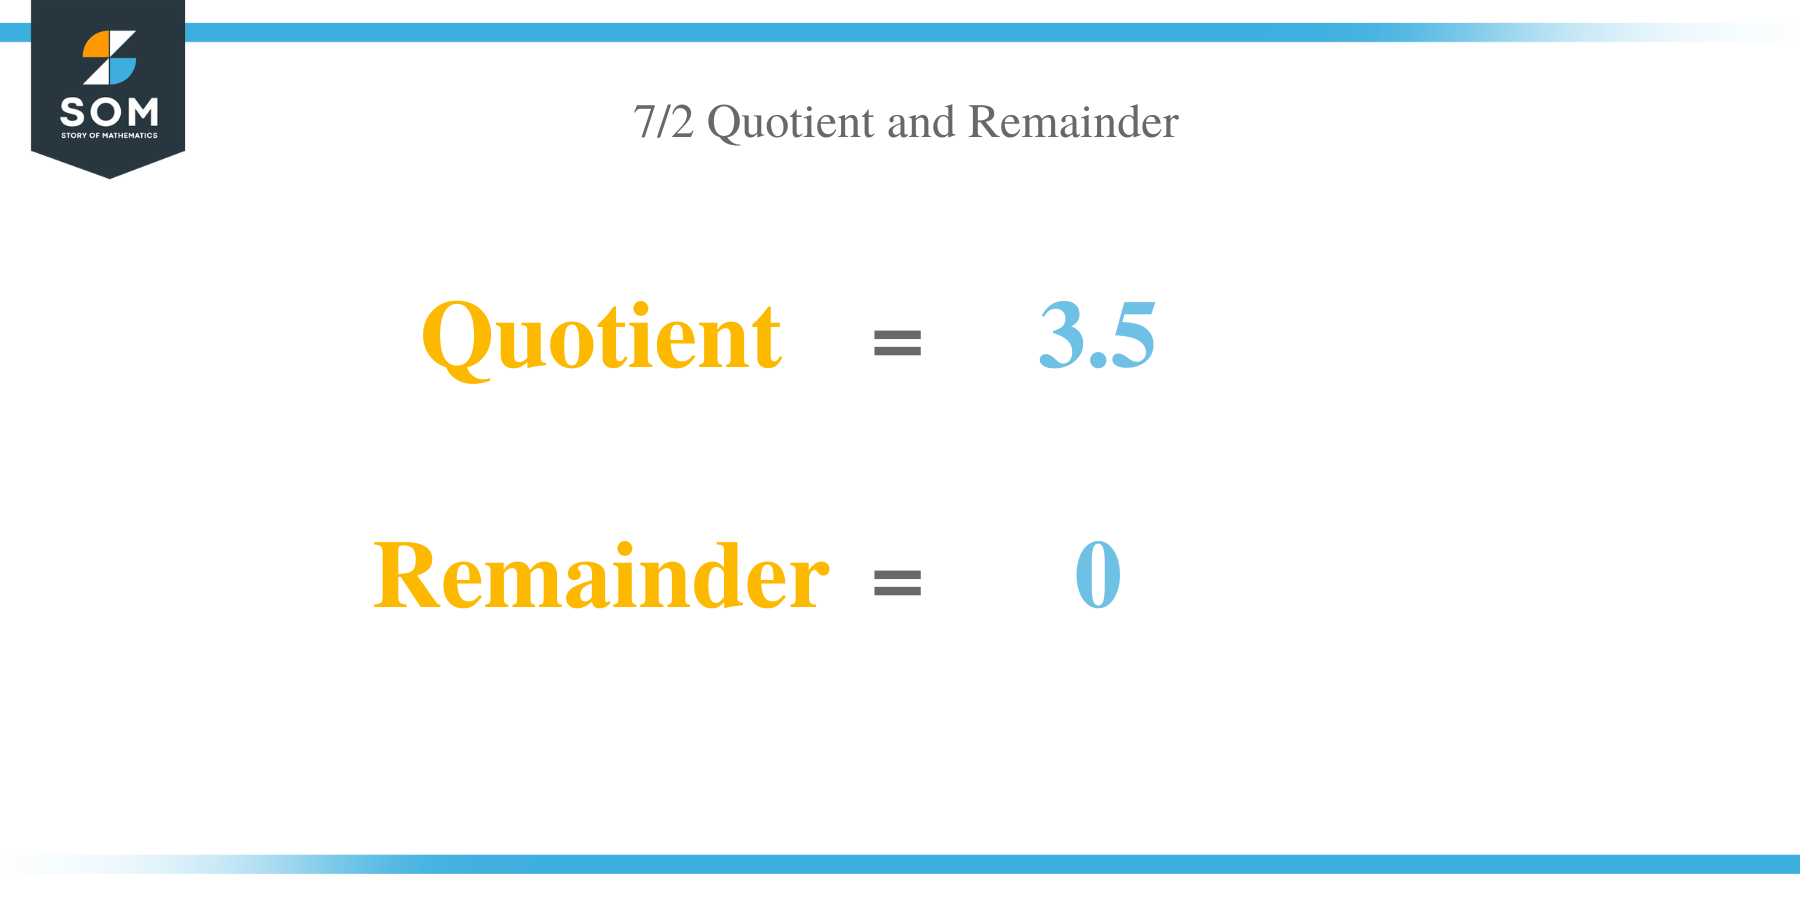 Quotient and remainder of 7 per 2